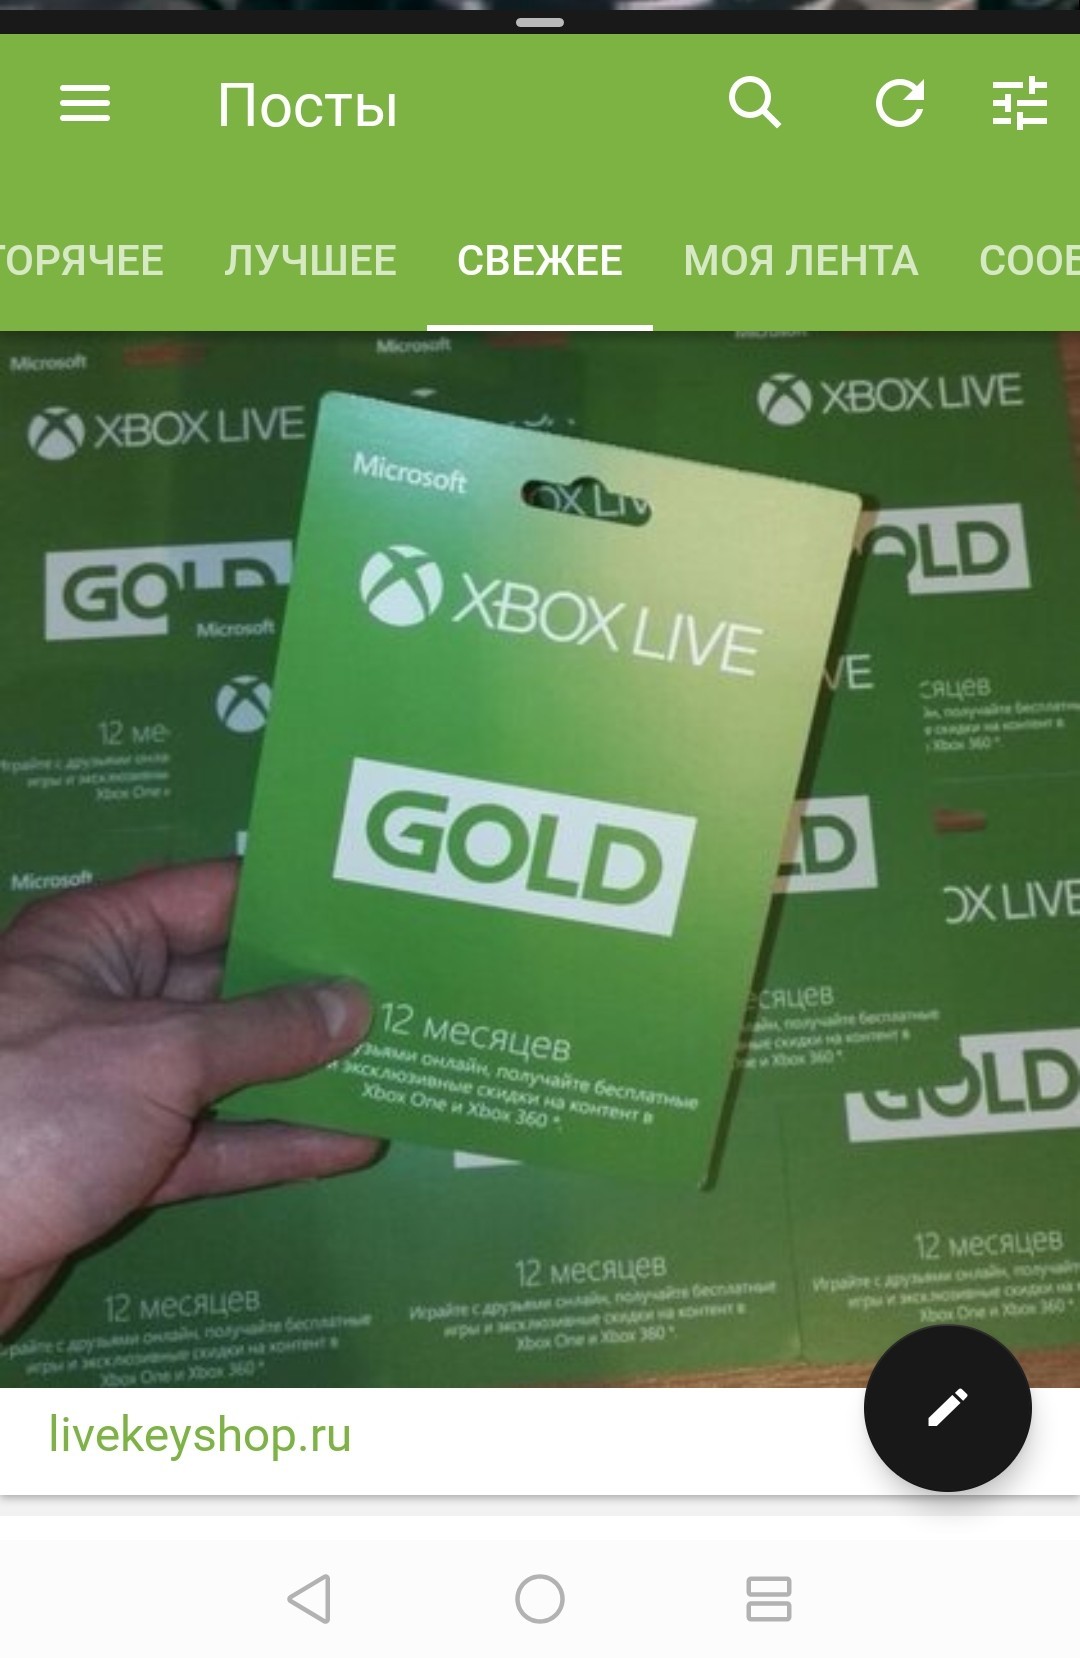 Купить подписку live. Xbox Live Gold. Xbox Live Gold 12. Подписка Xbox Live Gold на 12 месяцев. Подписка Xbox Live Gold.